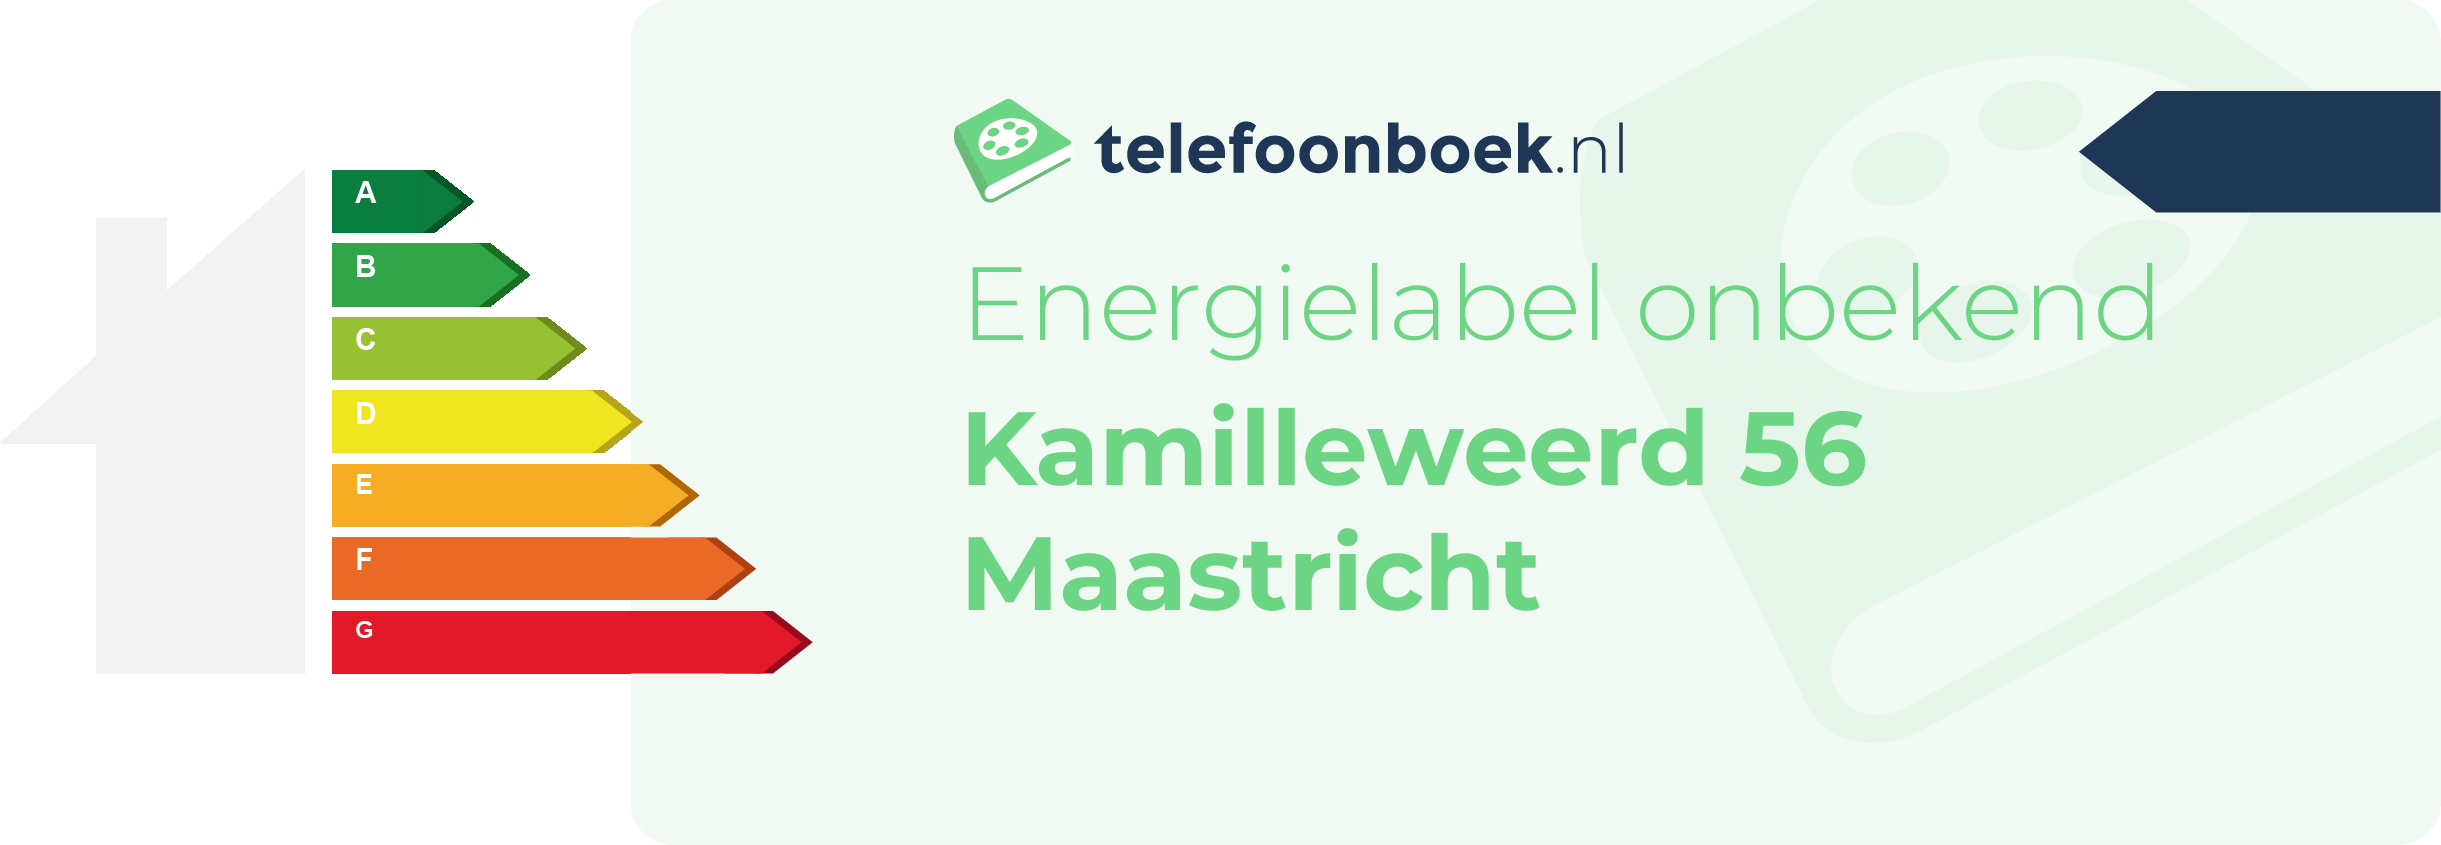 Energielabel Kamilleweerd 56 Maastricht